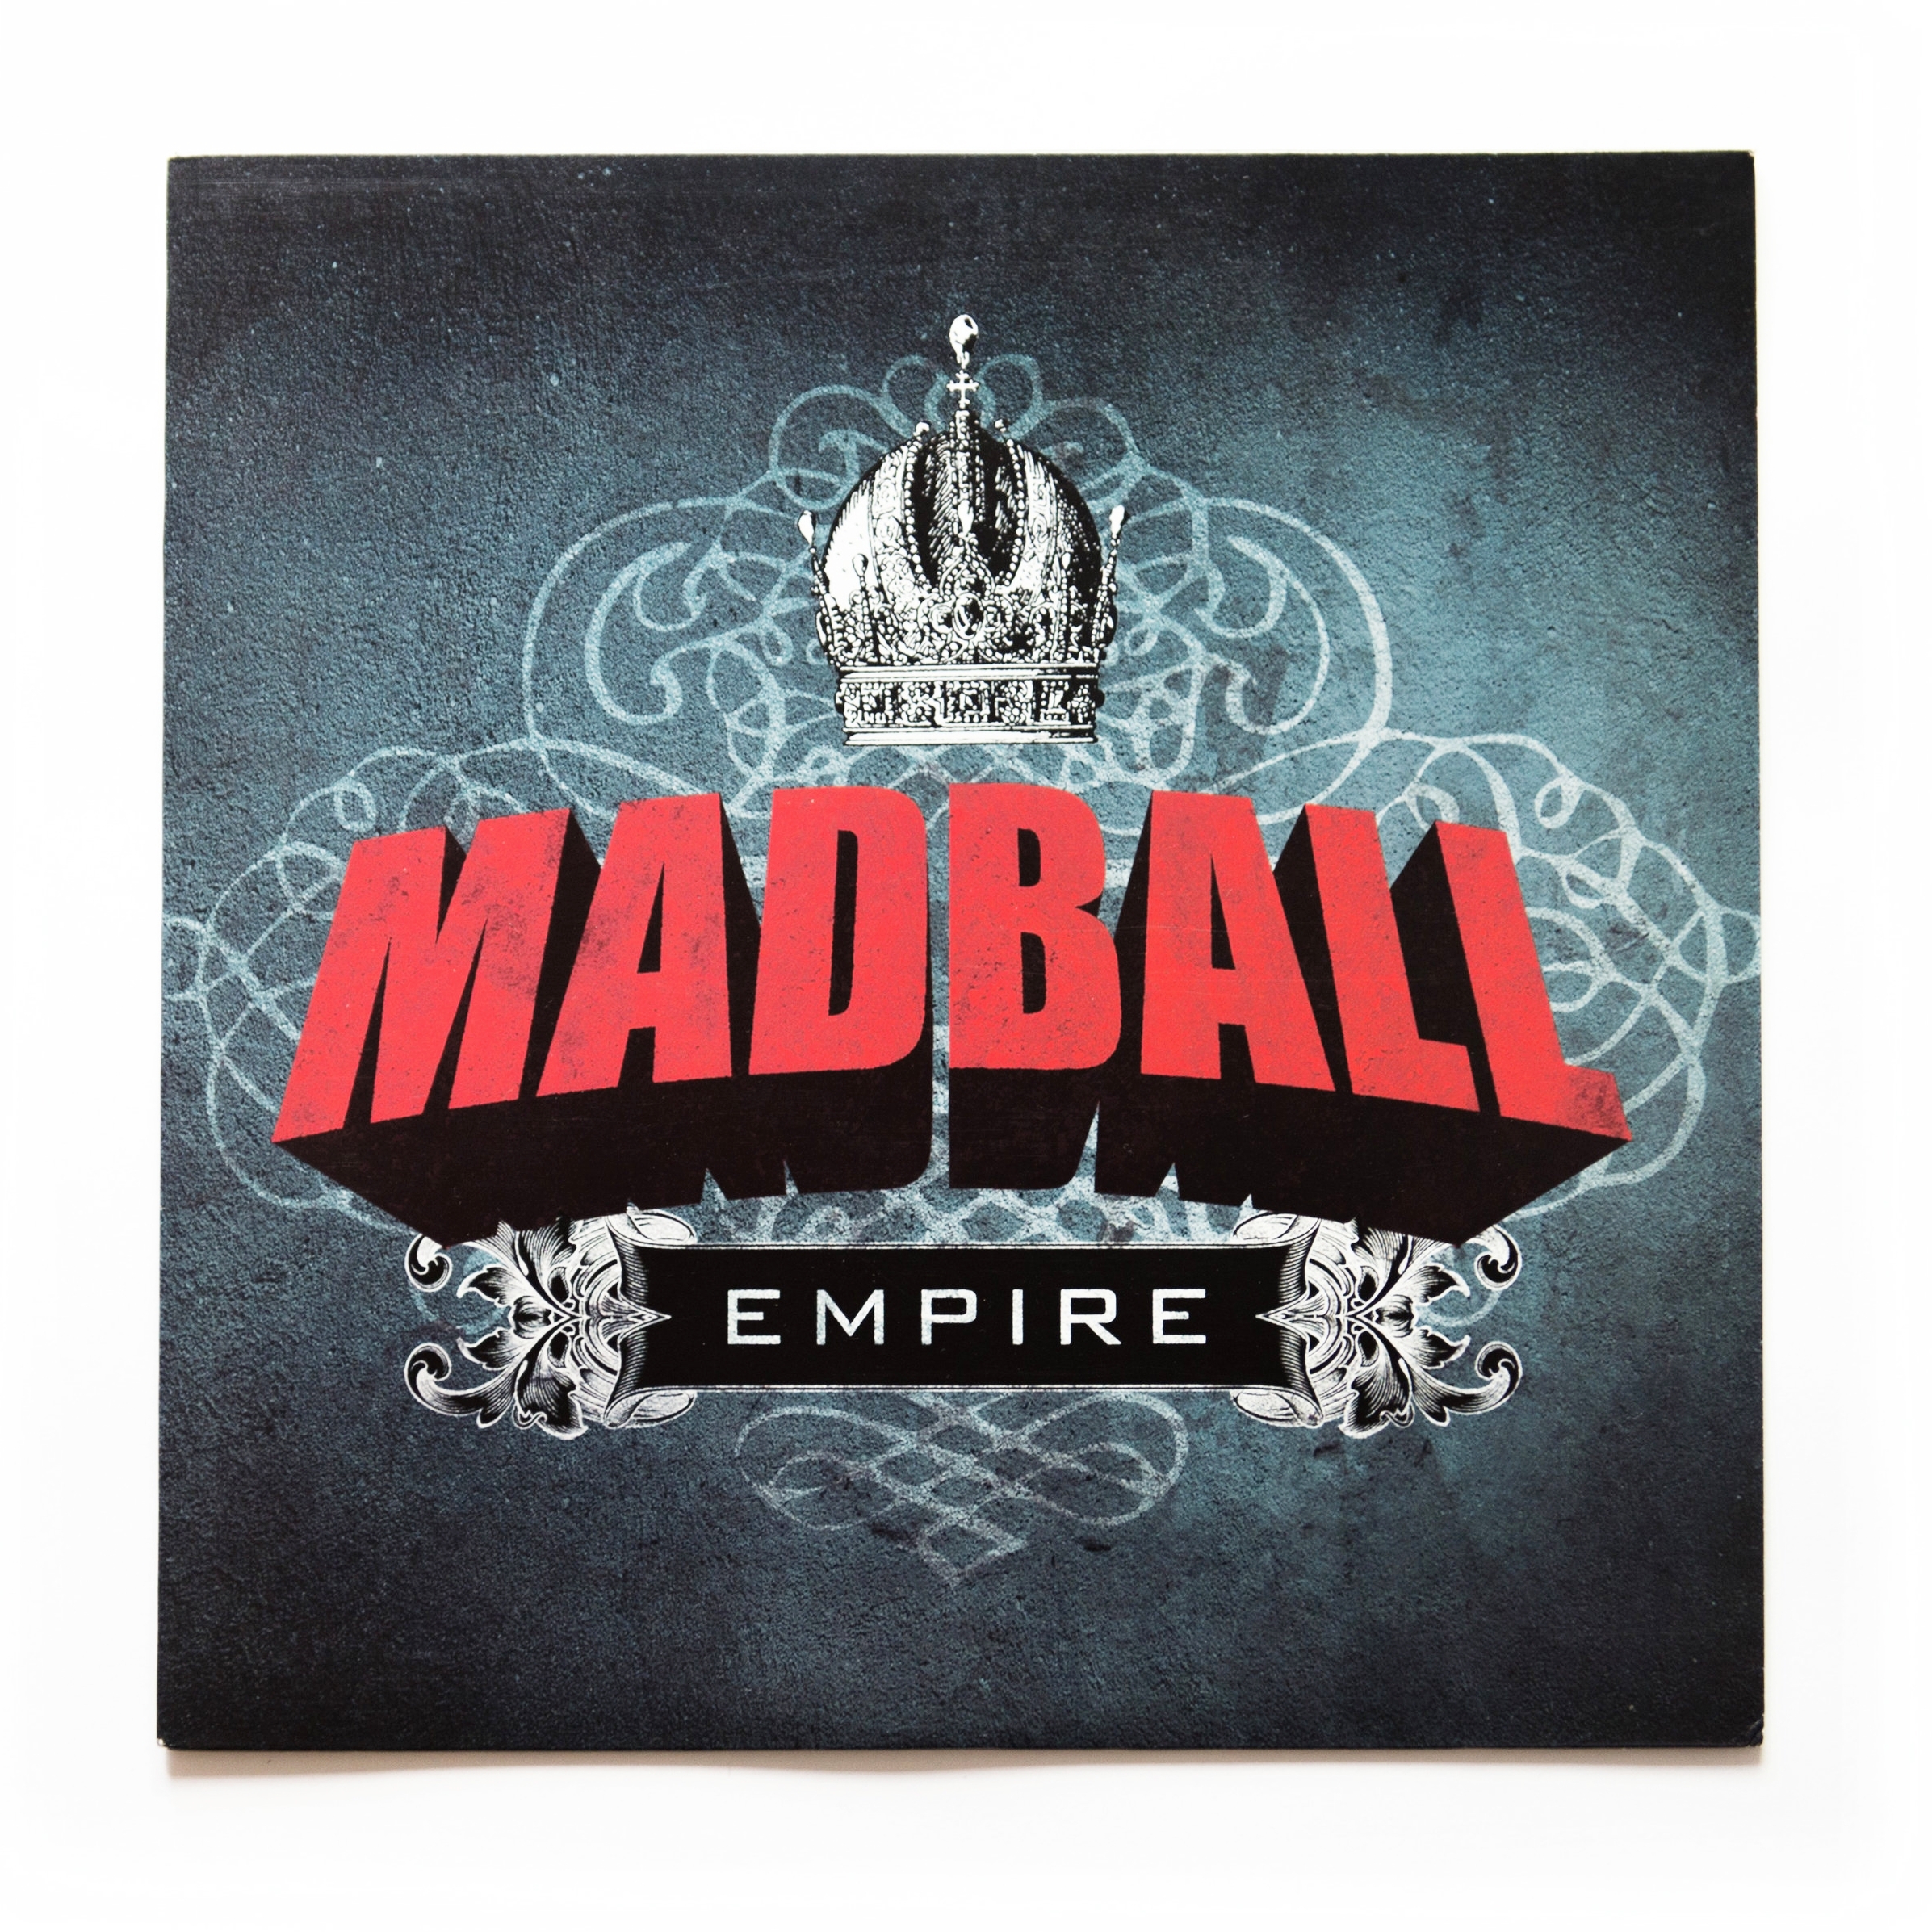  Madball  Empire  2010 (GoodFight Entertainment) 